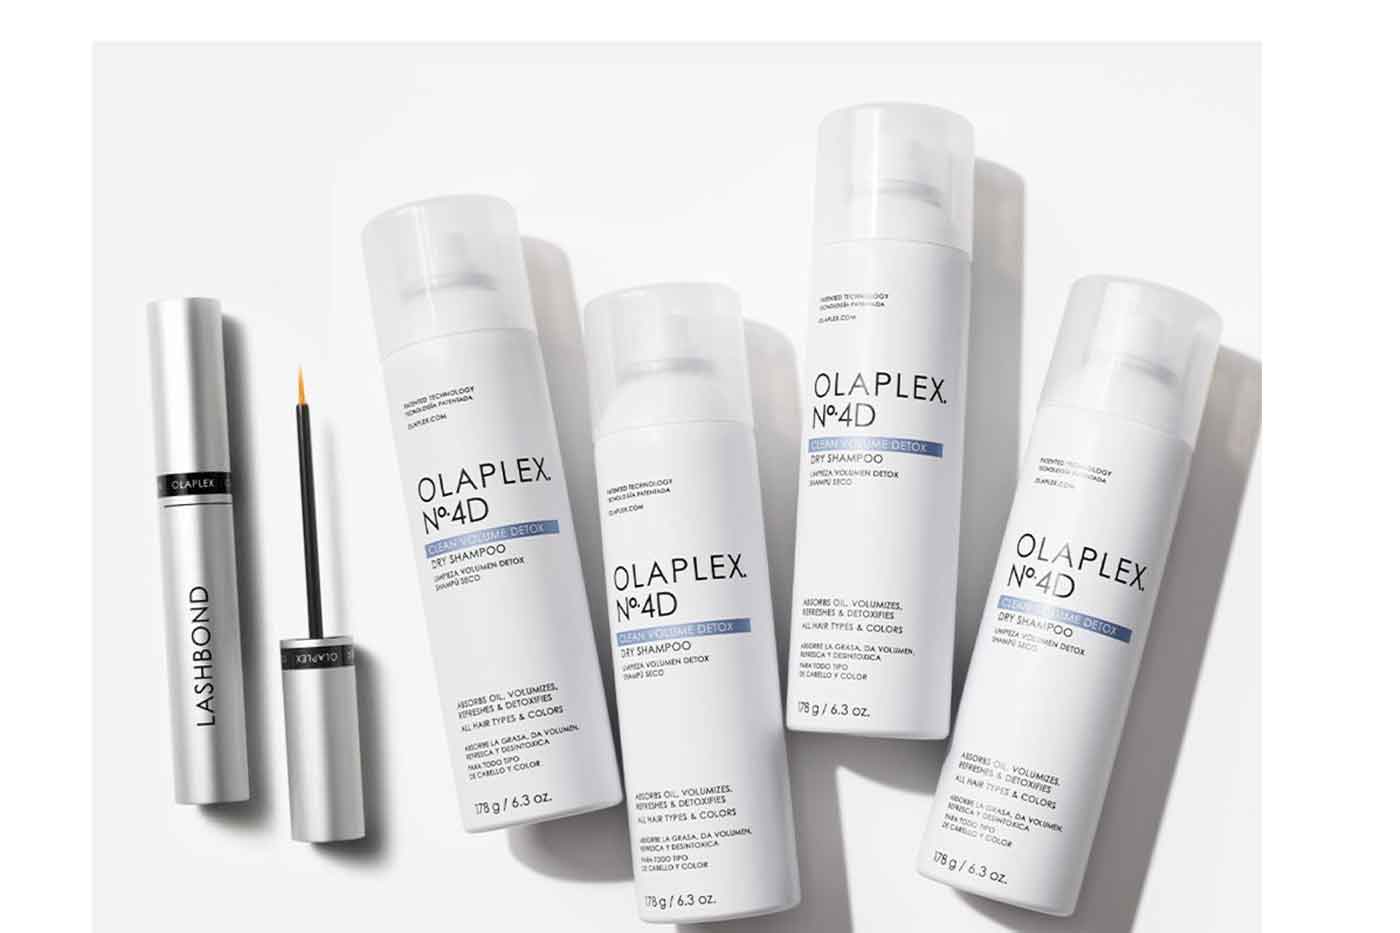 Olaplex launches Lashbond Building Serum and 4D Clean Volume Detox Dry Shampoo